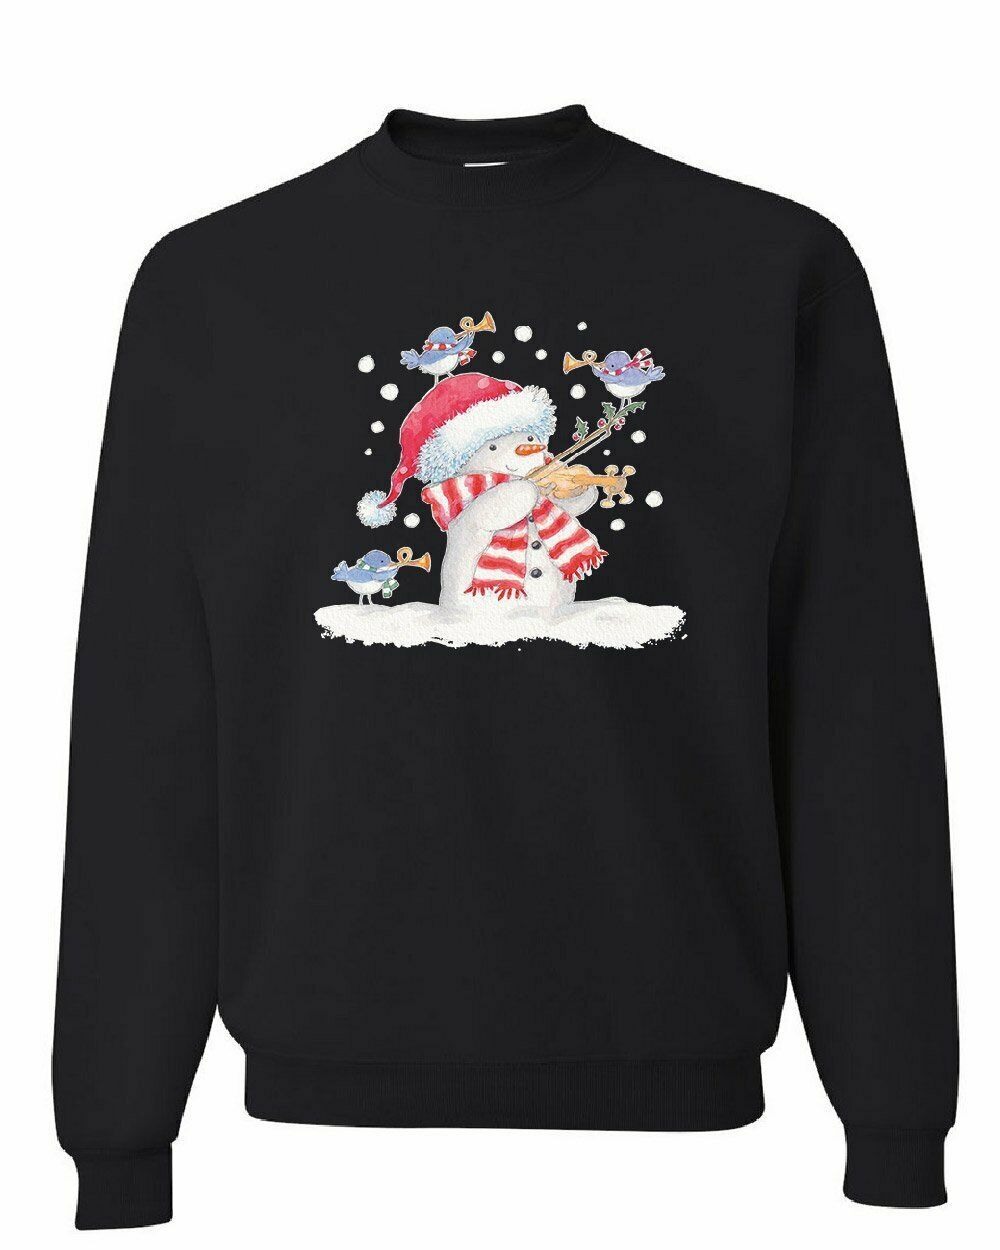 Snowman Playing a Violin Sweatshirt Merry Christmas  Snowman happiness funny birds Style: Sweatshirt, Color: Black